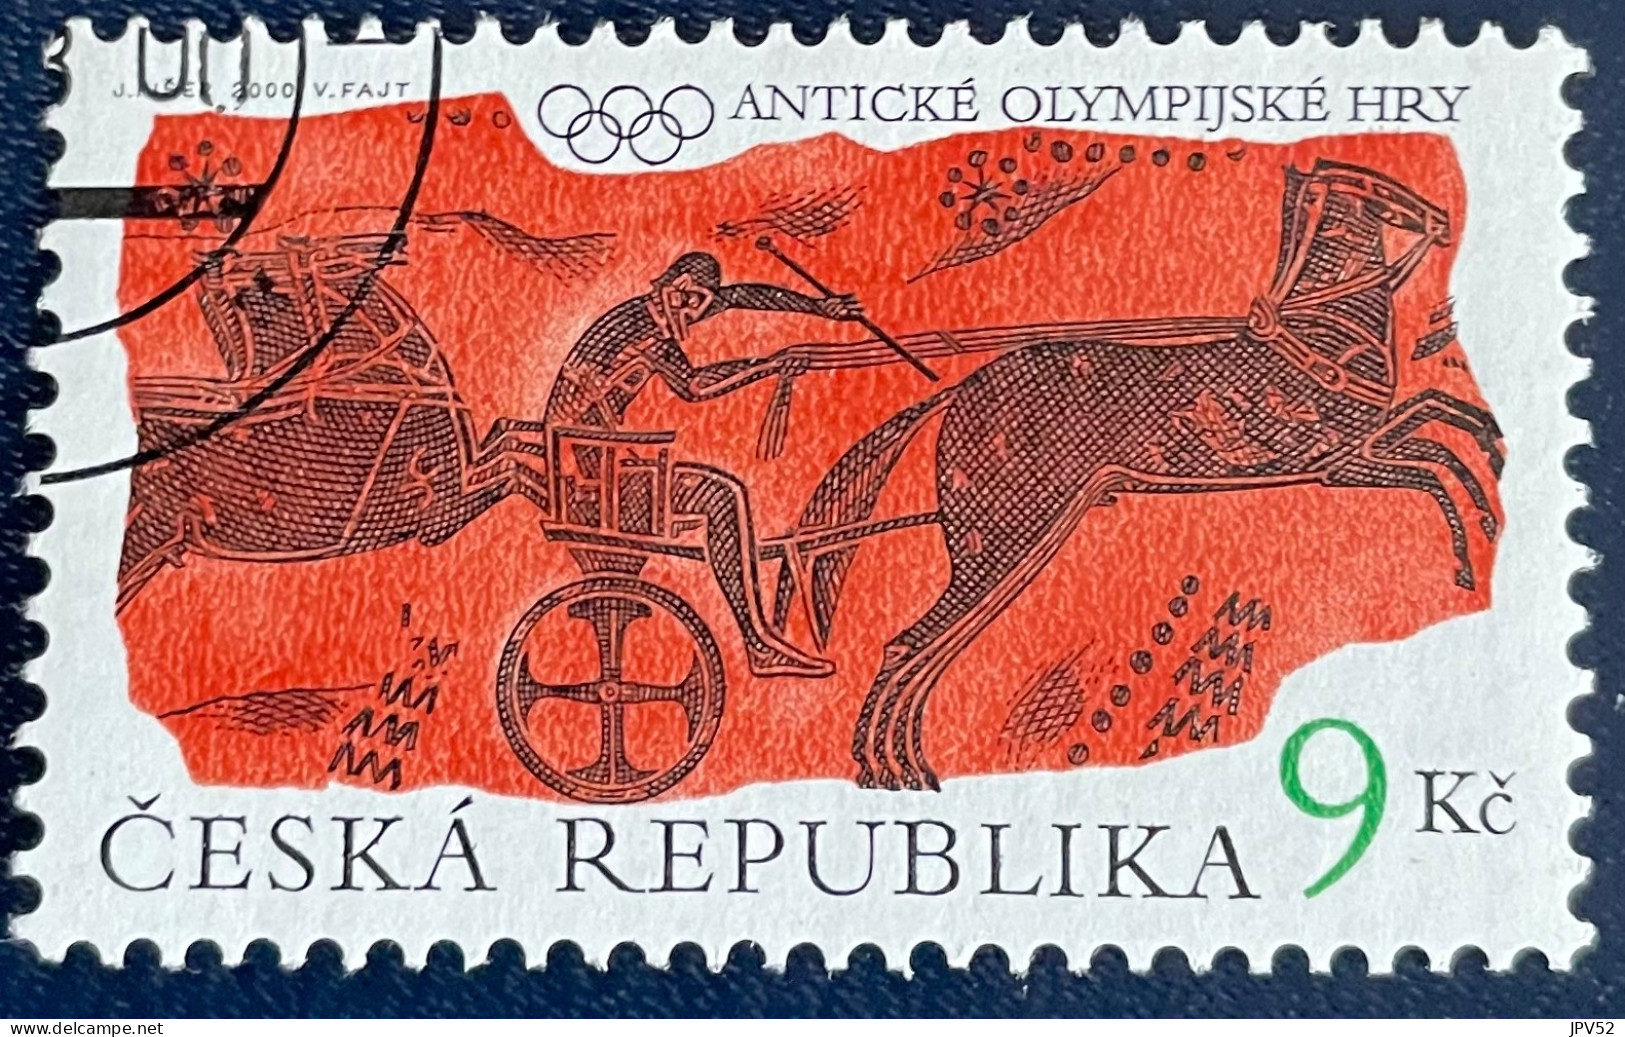 Ceska Republika - Tsjechië - C4/6 - 2000 - (°)used - Michel 268 - Oude Olympische Spelen - Gebraucht